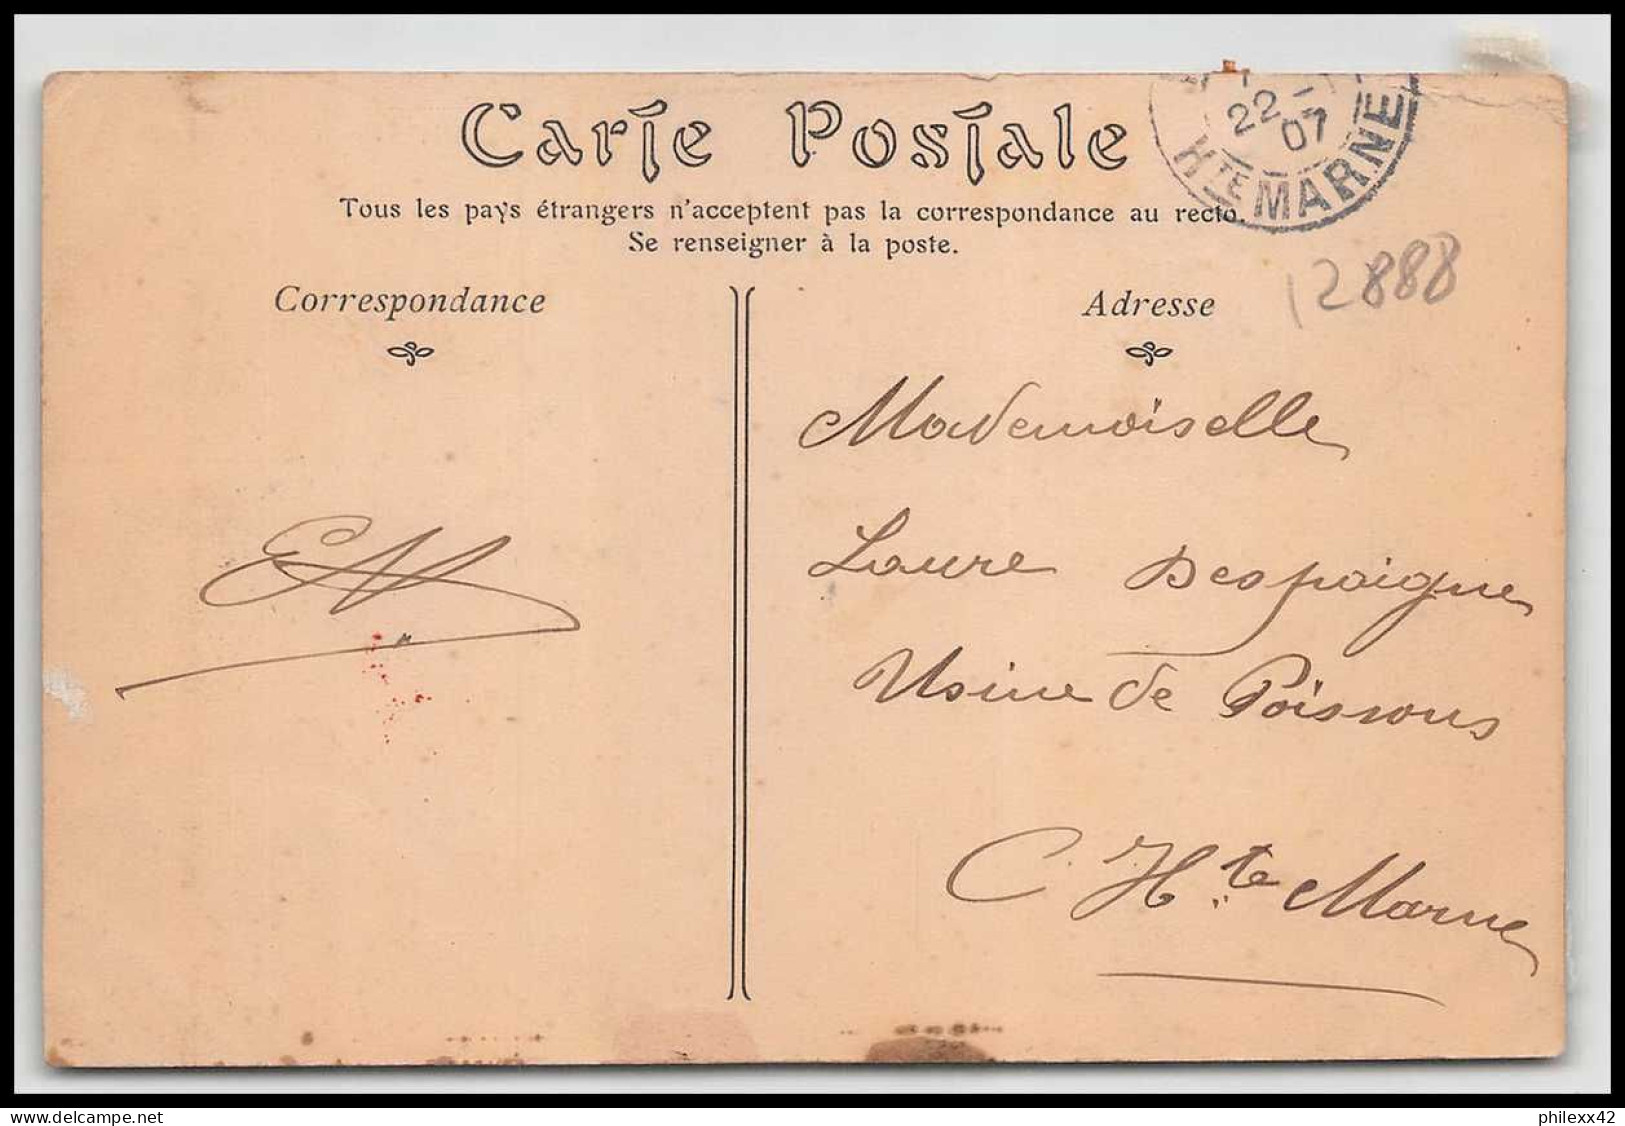 12888 5c Vert Convoyeur Nice 1907 Monaco Carte Postale Menton Postcard - Lettres & Documents